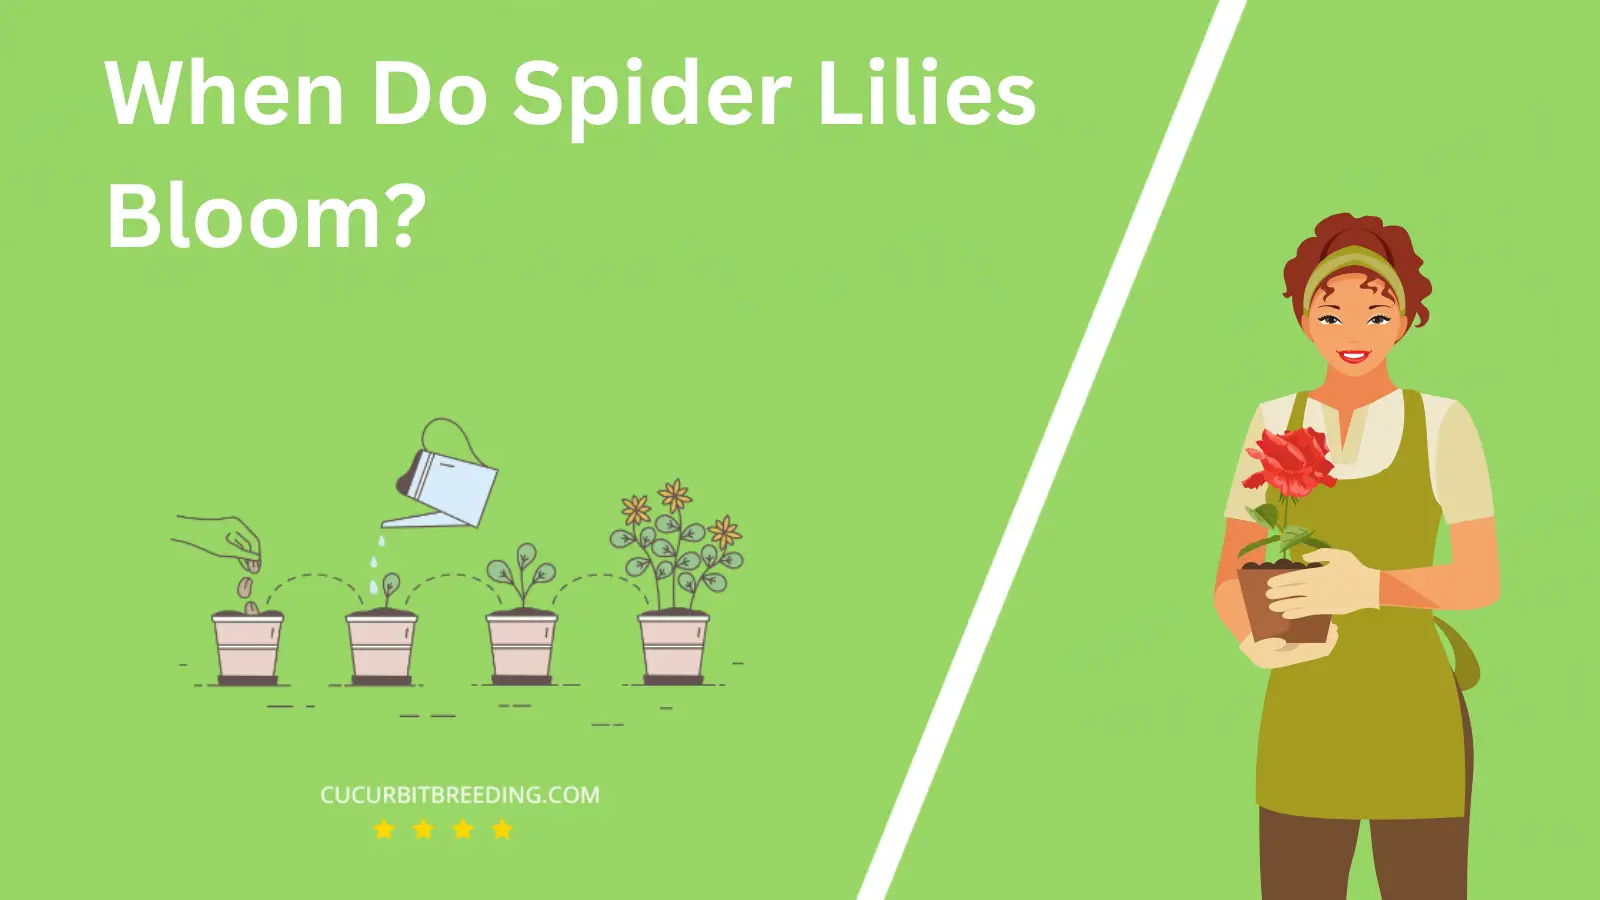 When Do Spider Lilies Bloom?